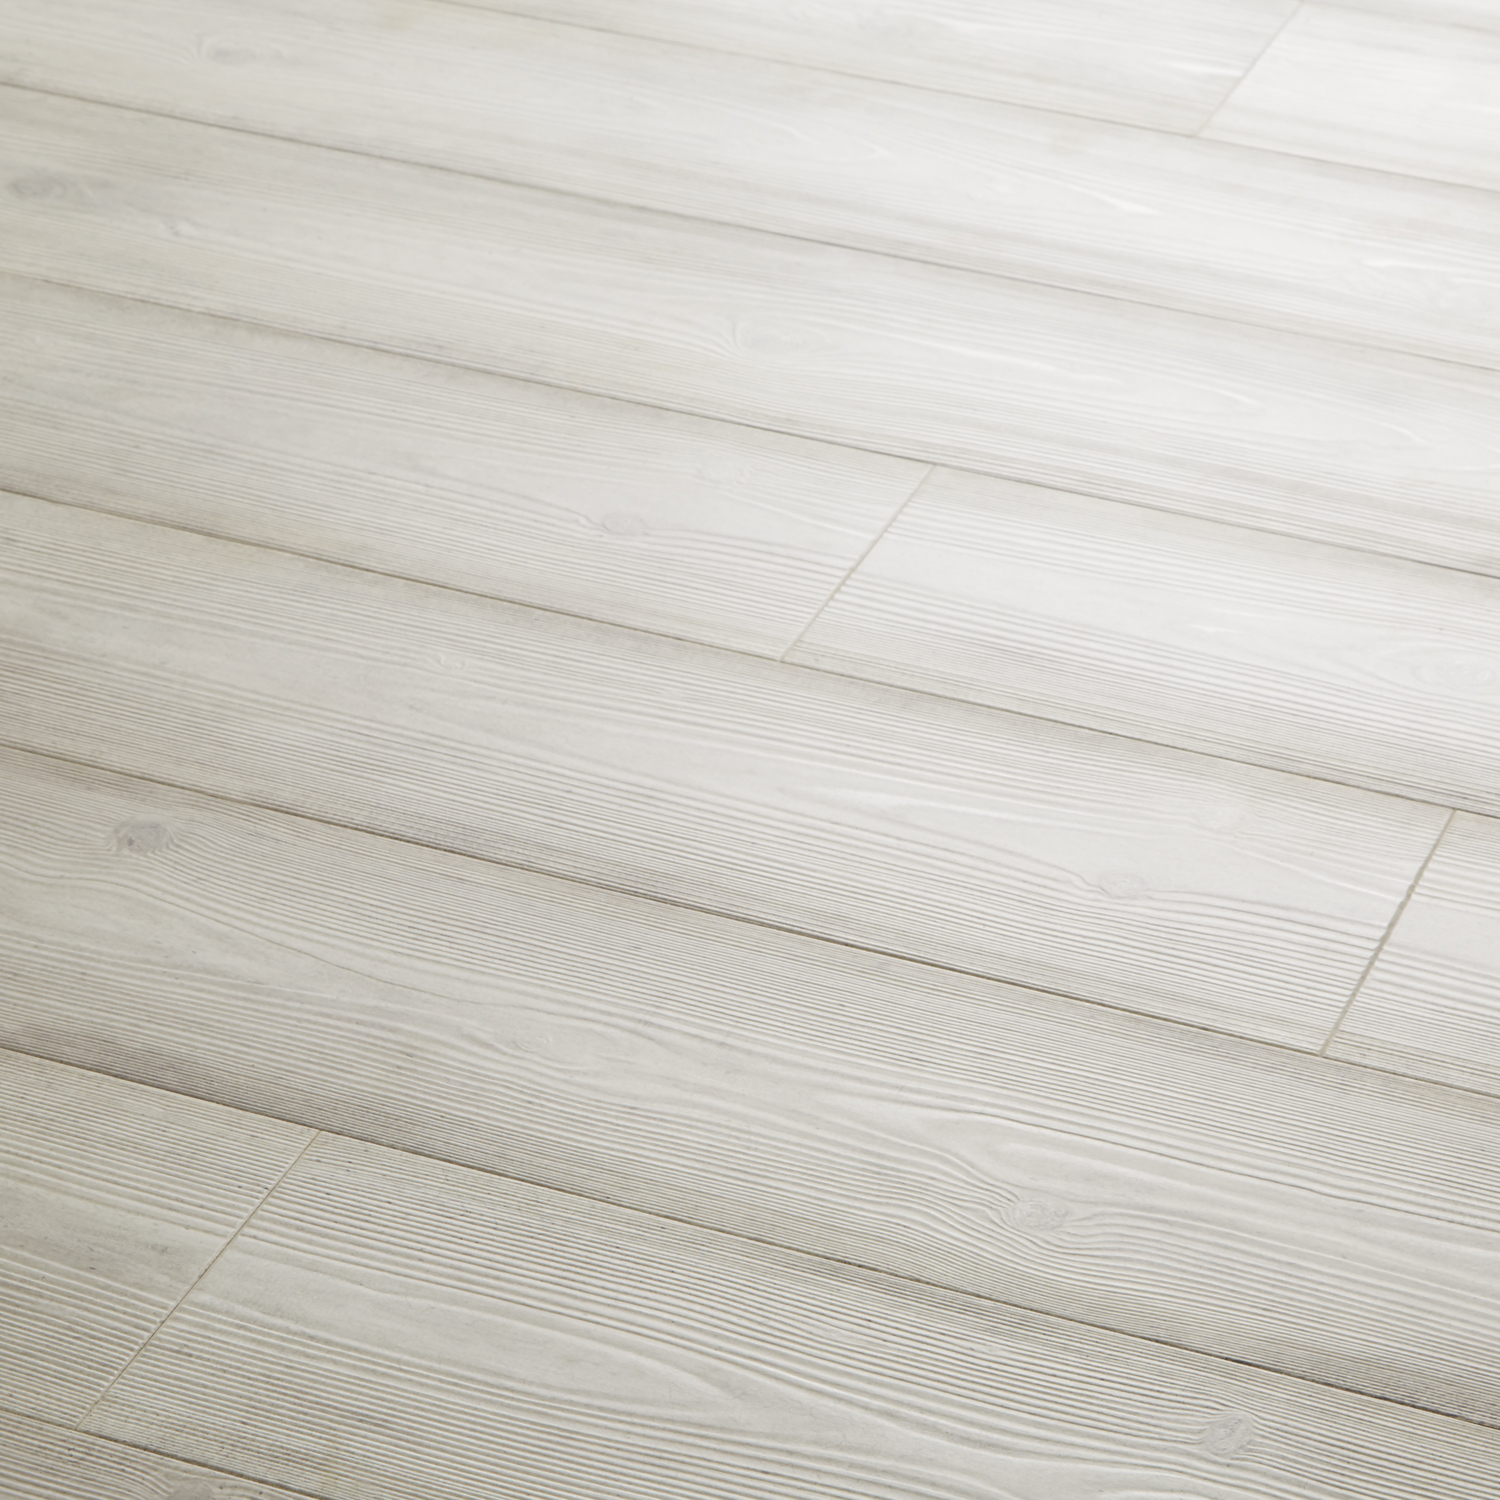 Impressive Concrete Wood Light Grey Laminate | Carpetright